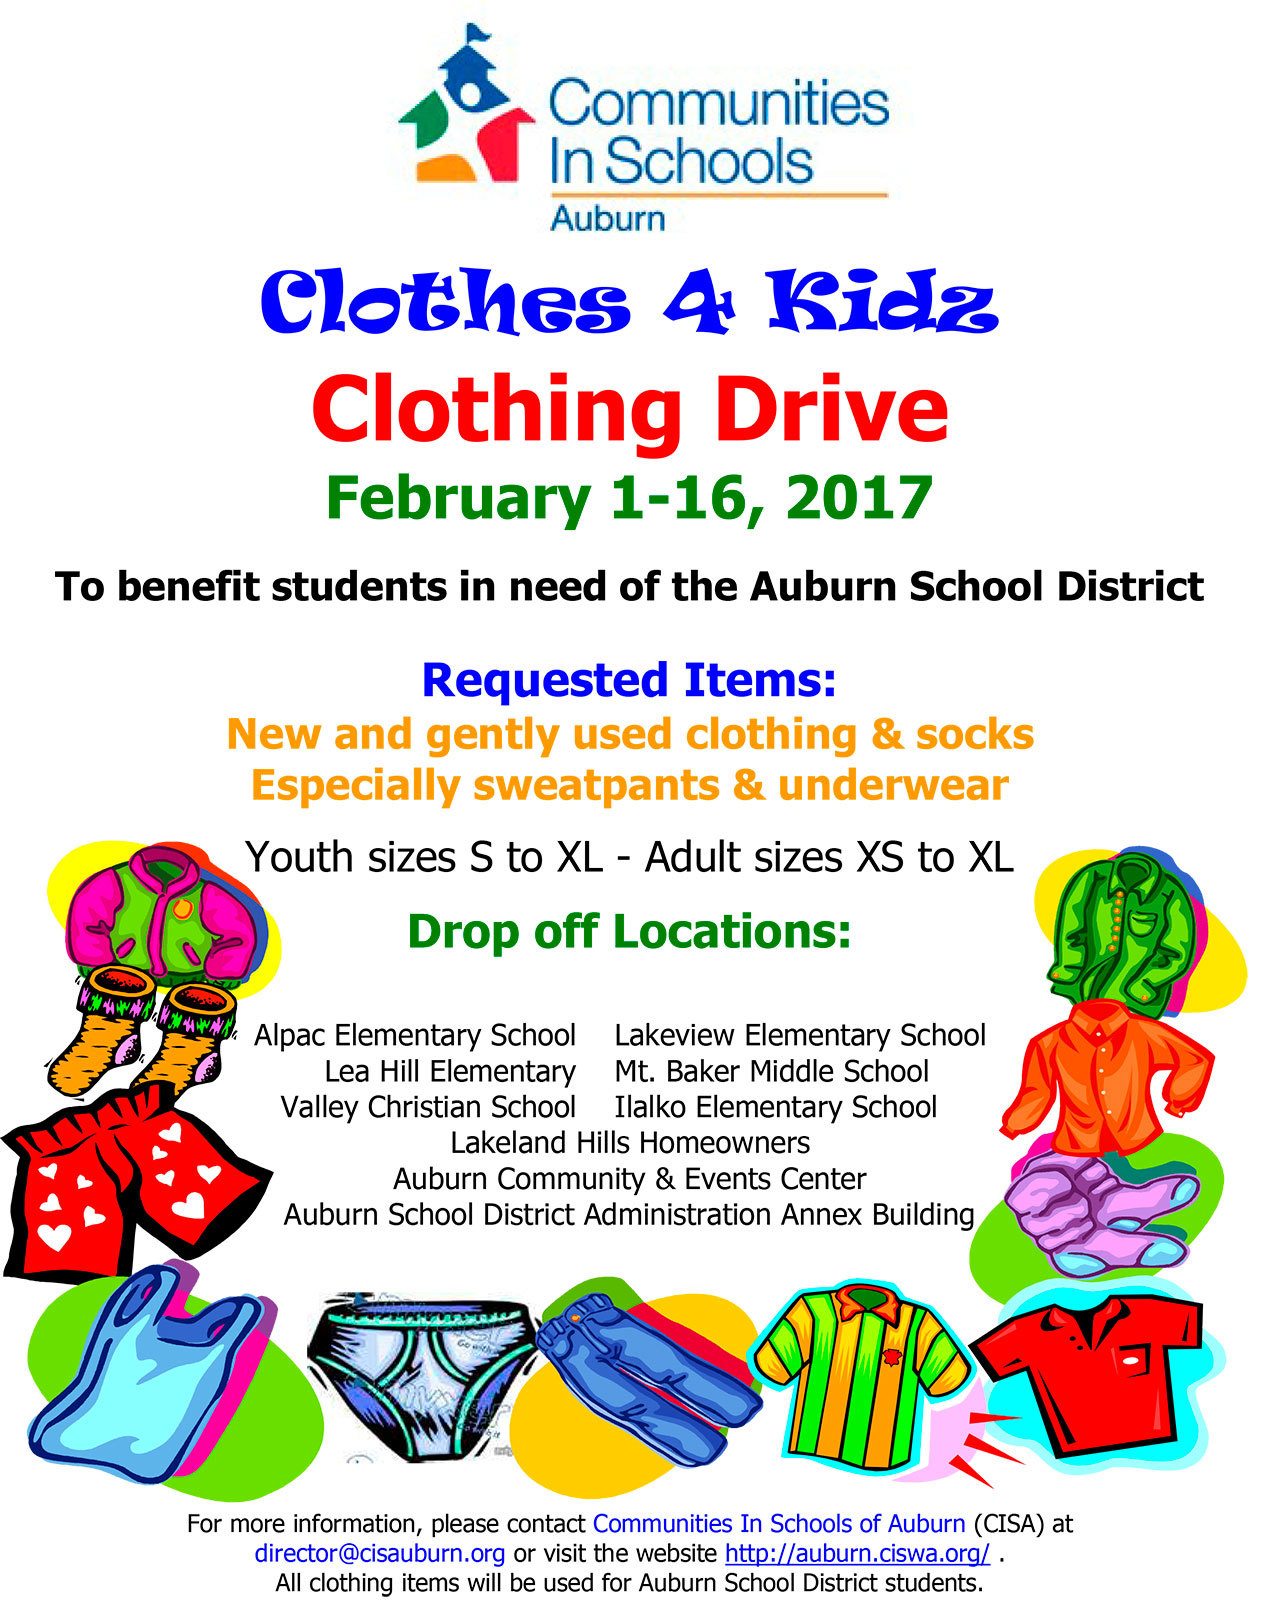 Communities In Schools of Auburn organizes clothing drive